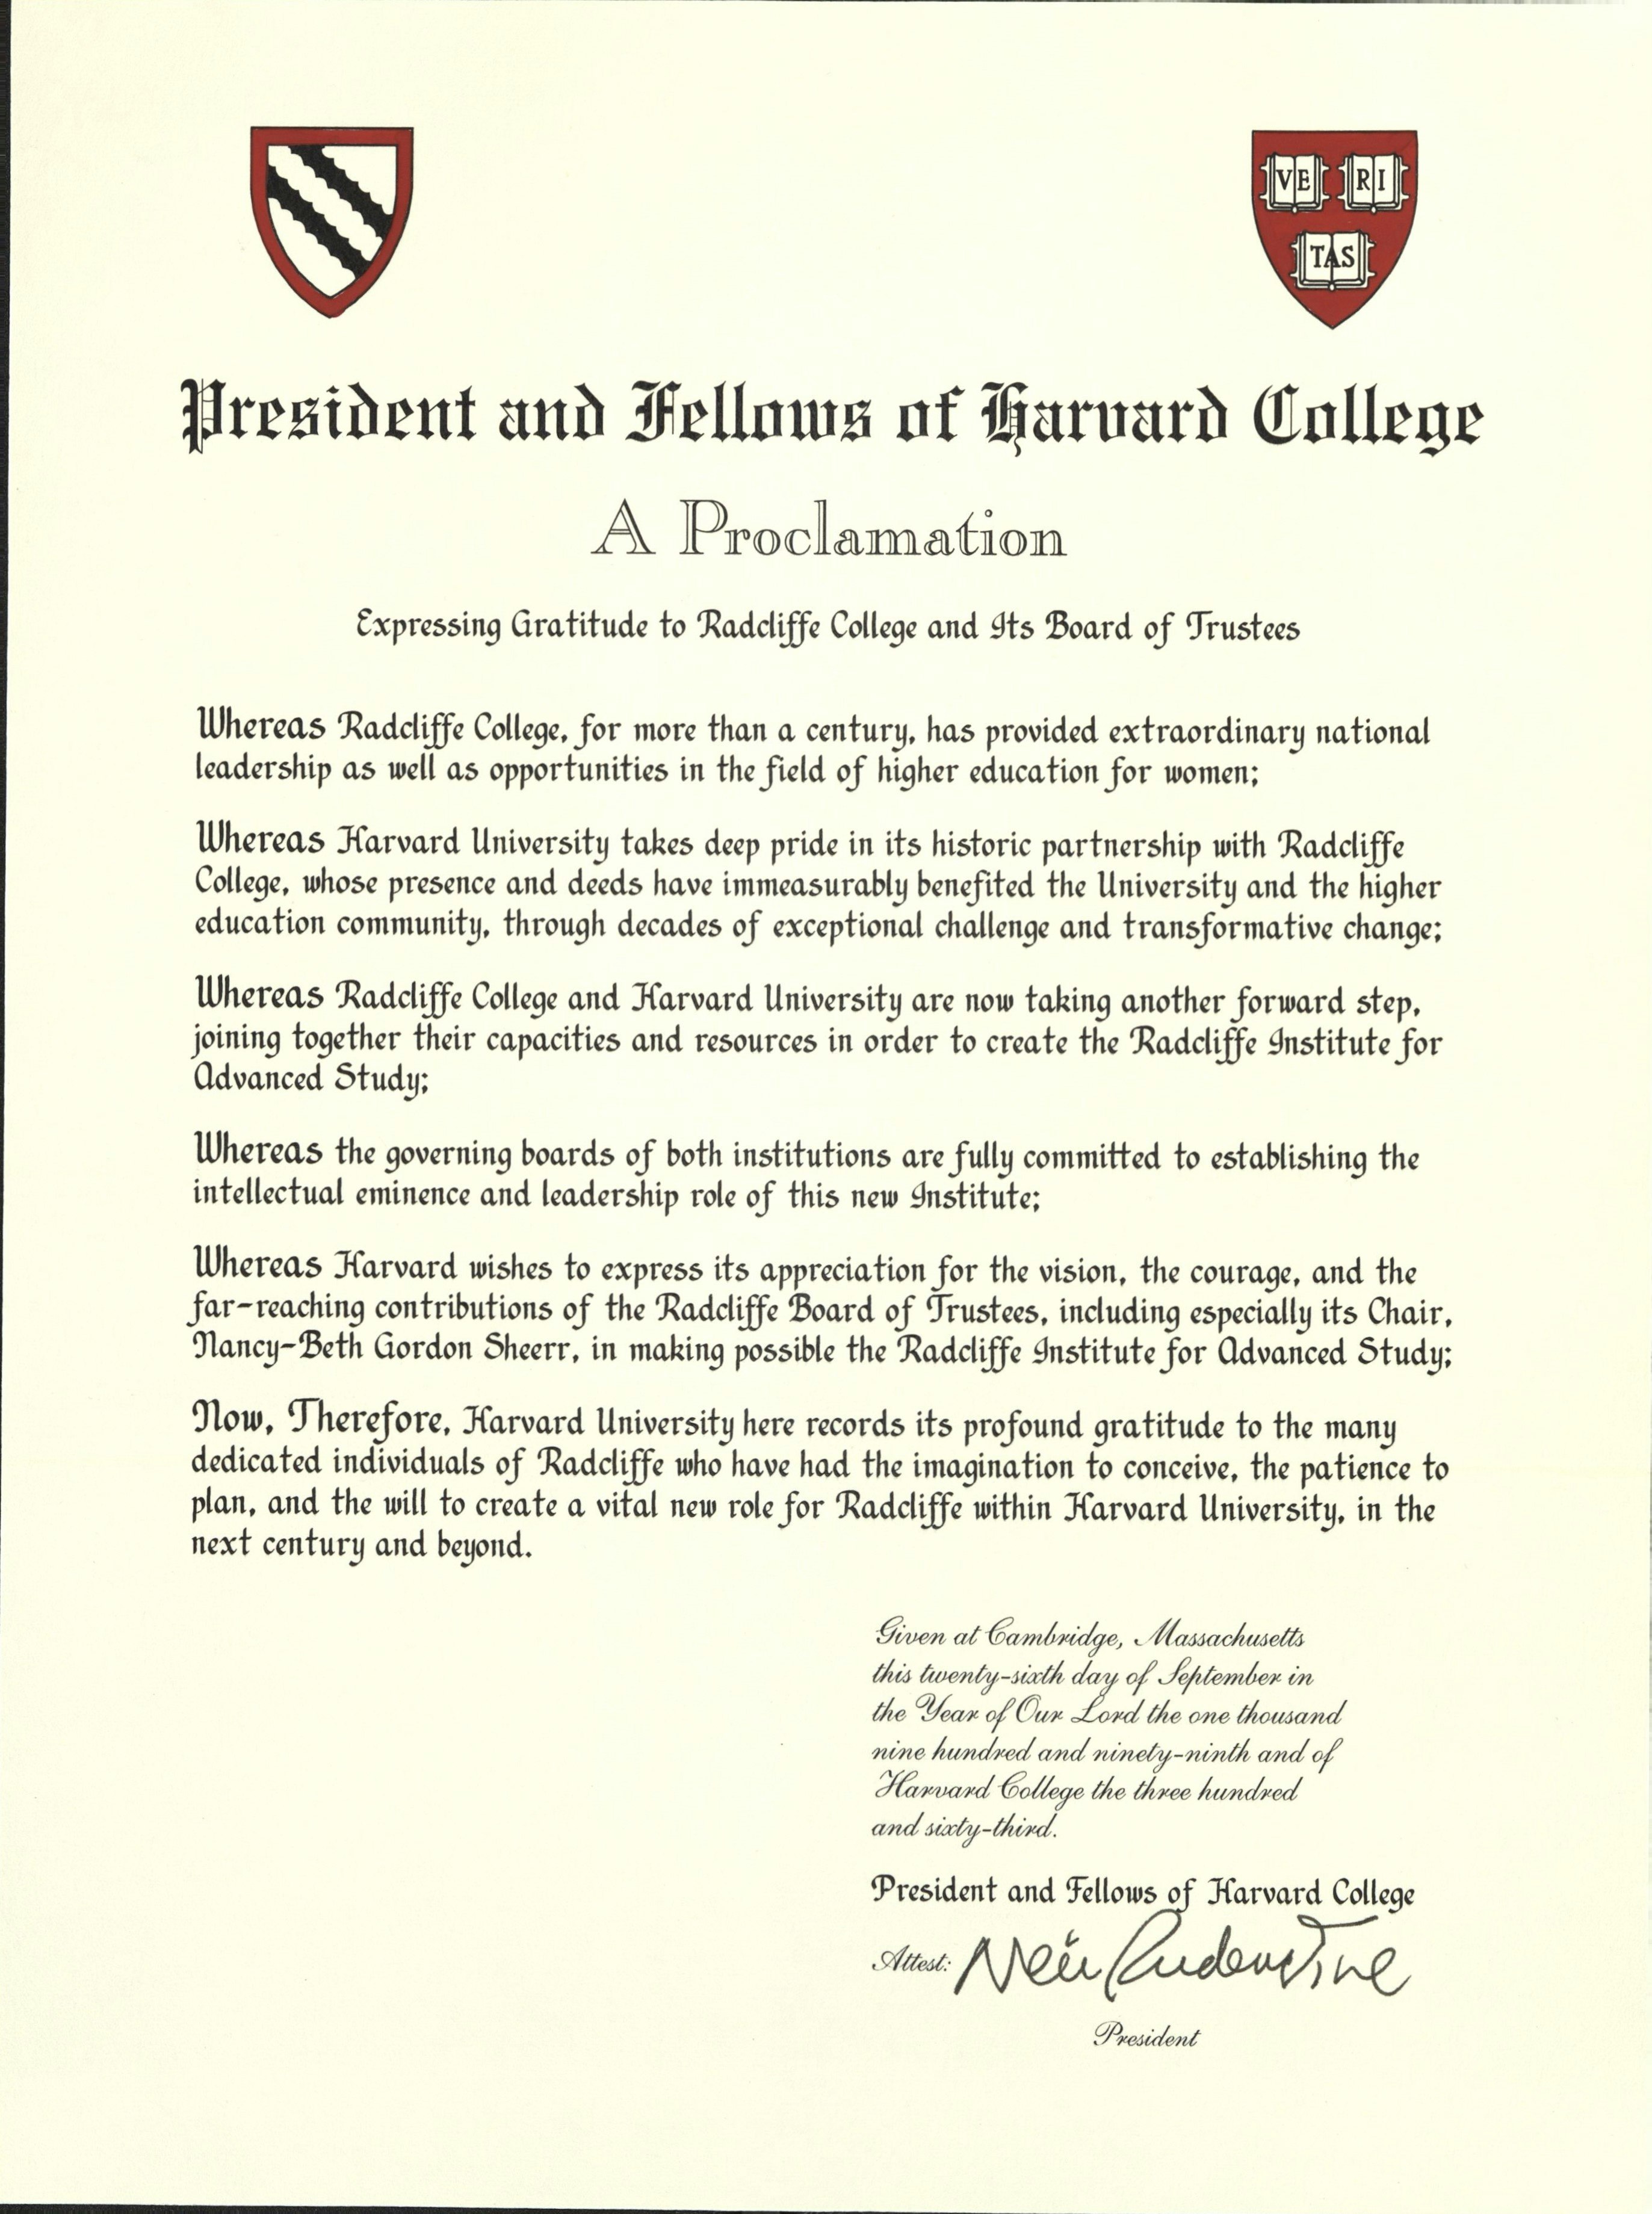 Harvard College Proclamation